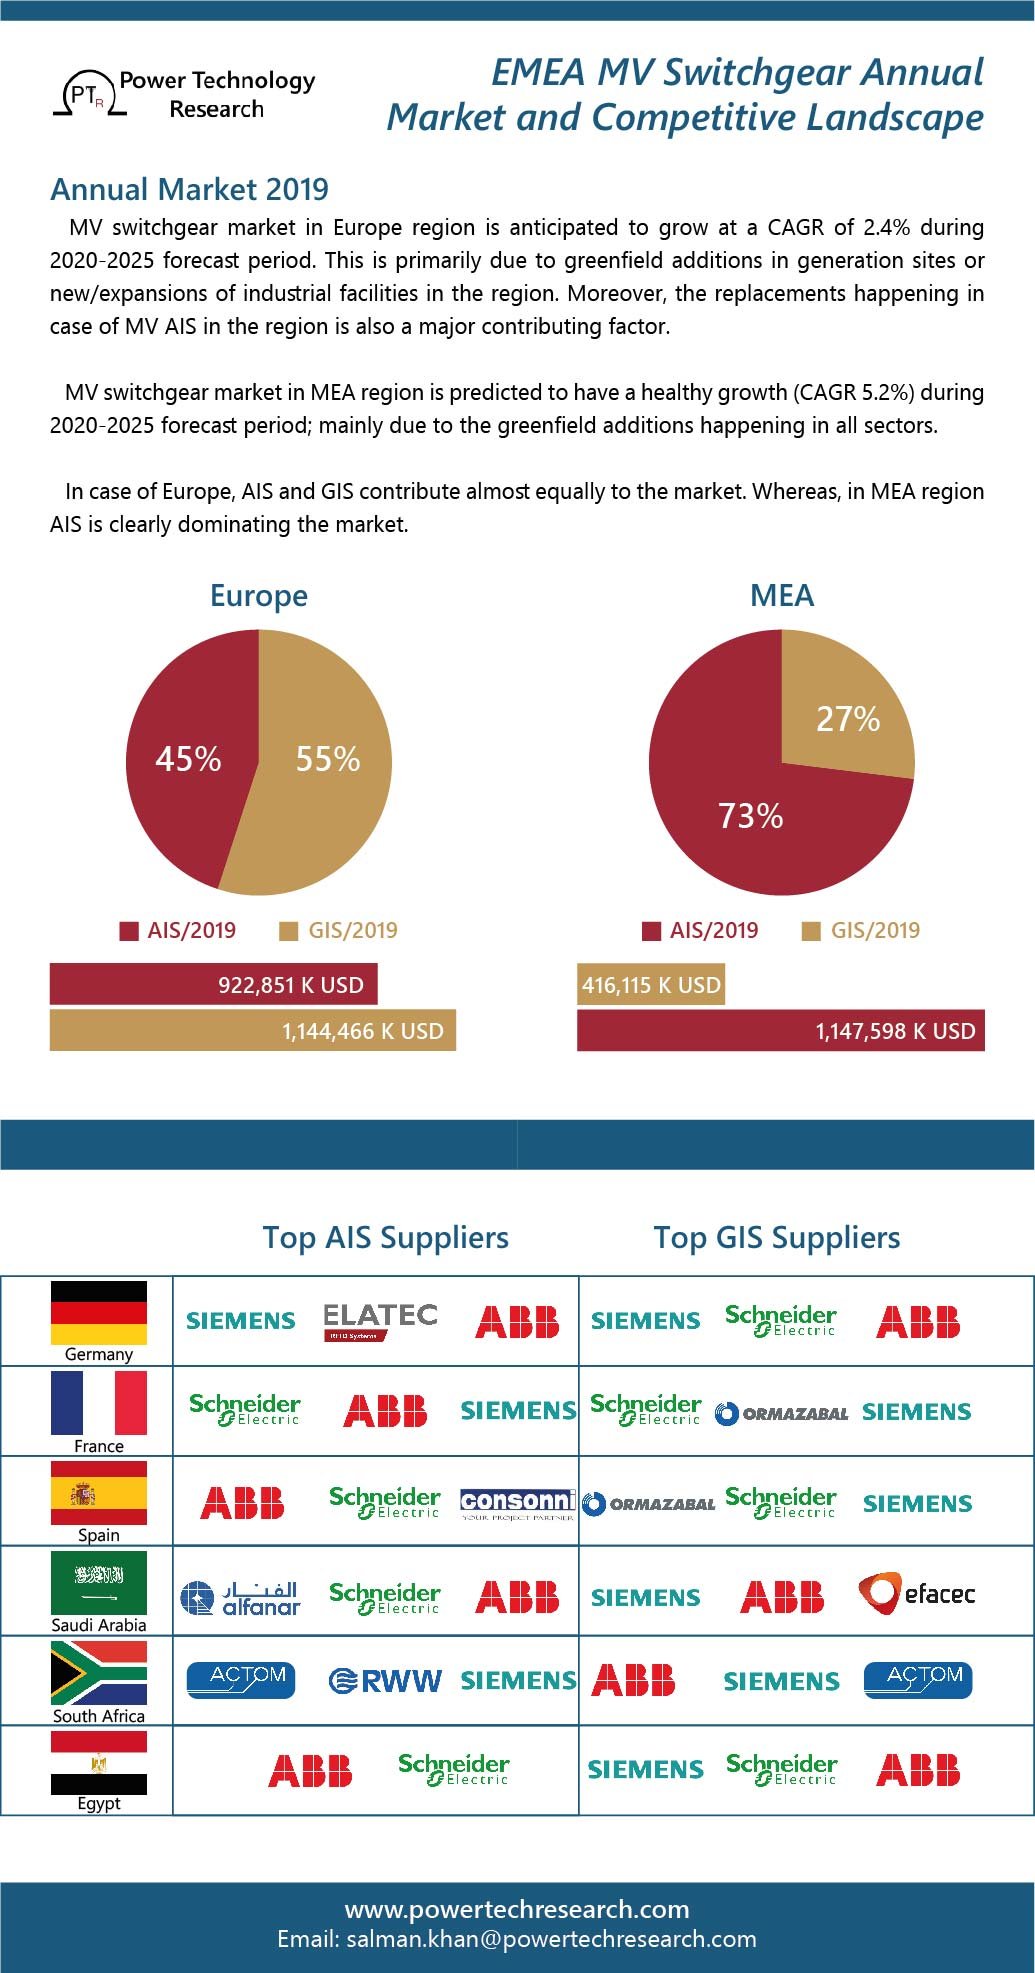 EMEA MV Switchgear Annual Market and Competitive Landscape